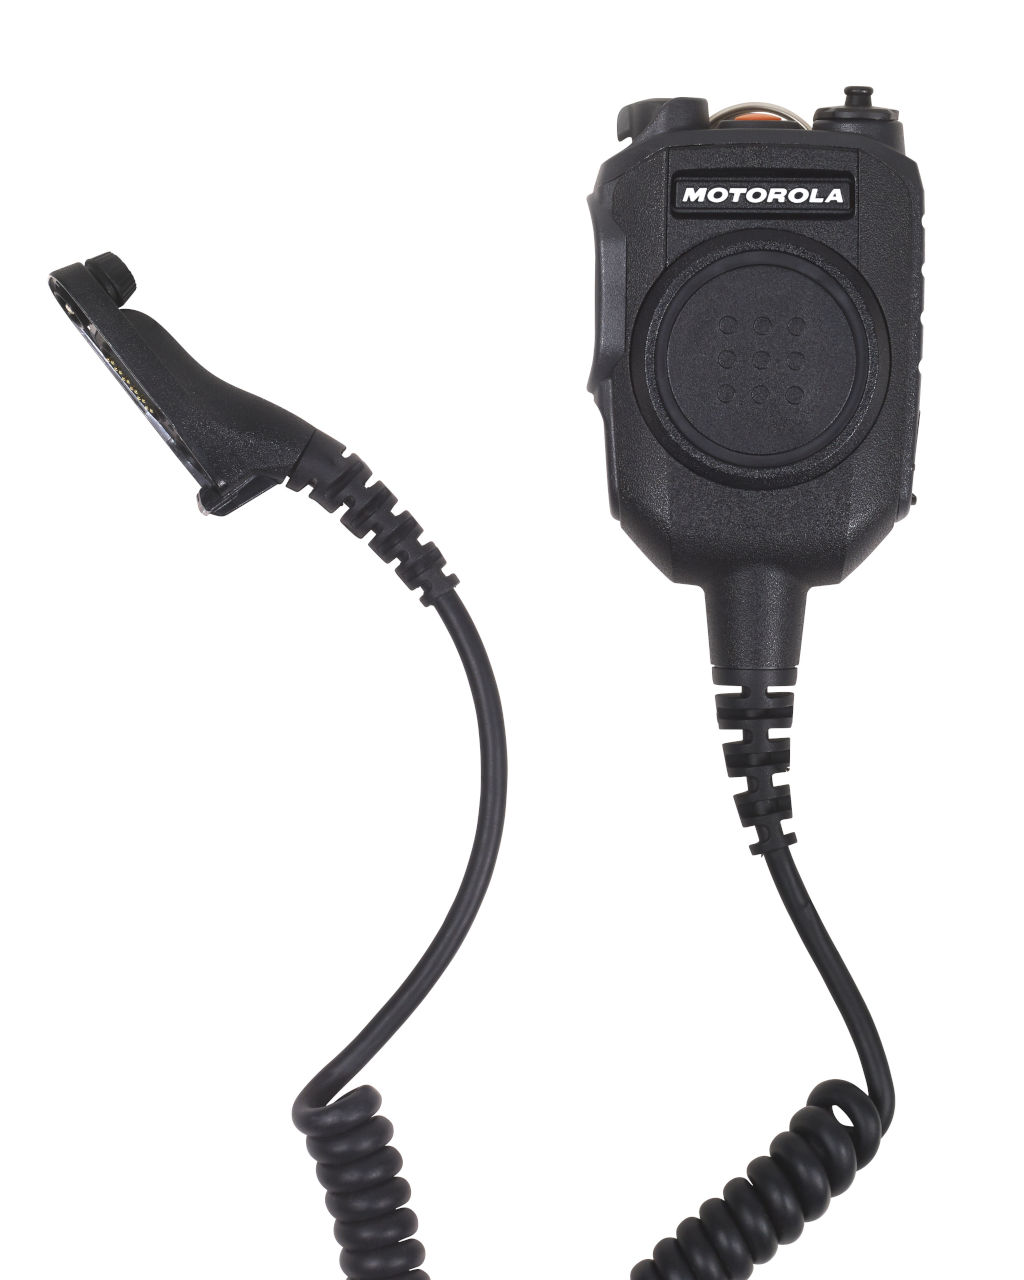 Motorola großes Lautsprecher-Mikrofon IMPRES mit Nexus Buchse PMMN4113A